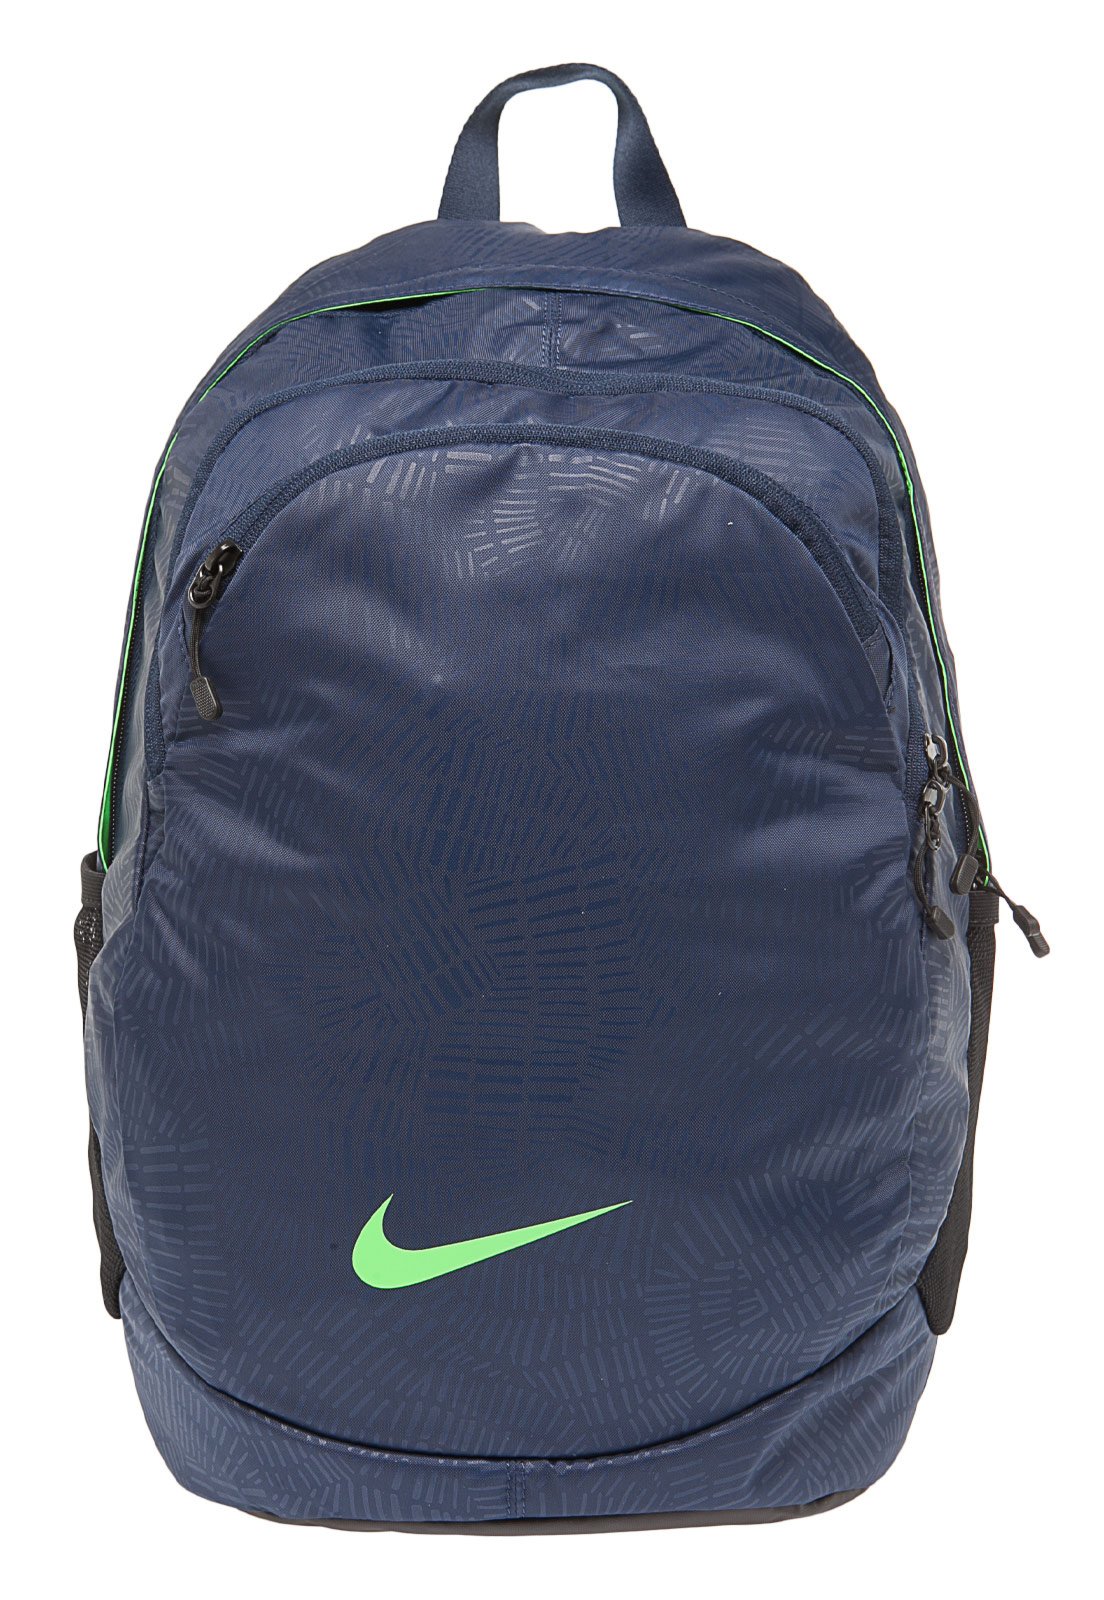 Mochila Nike Backpack Azul-Marinho Compre Agora | Dafiti Brasil